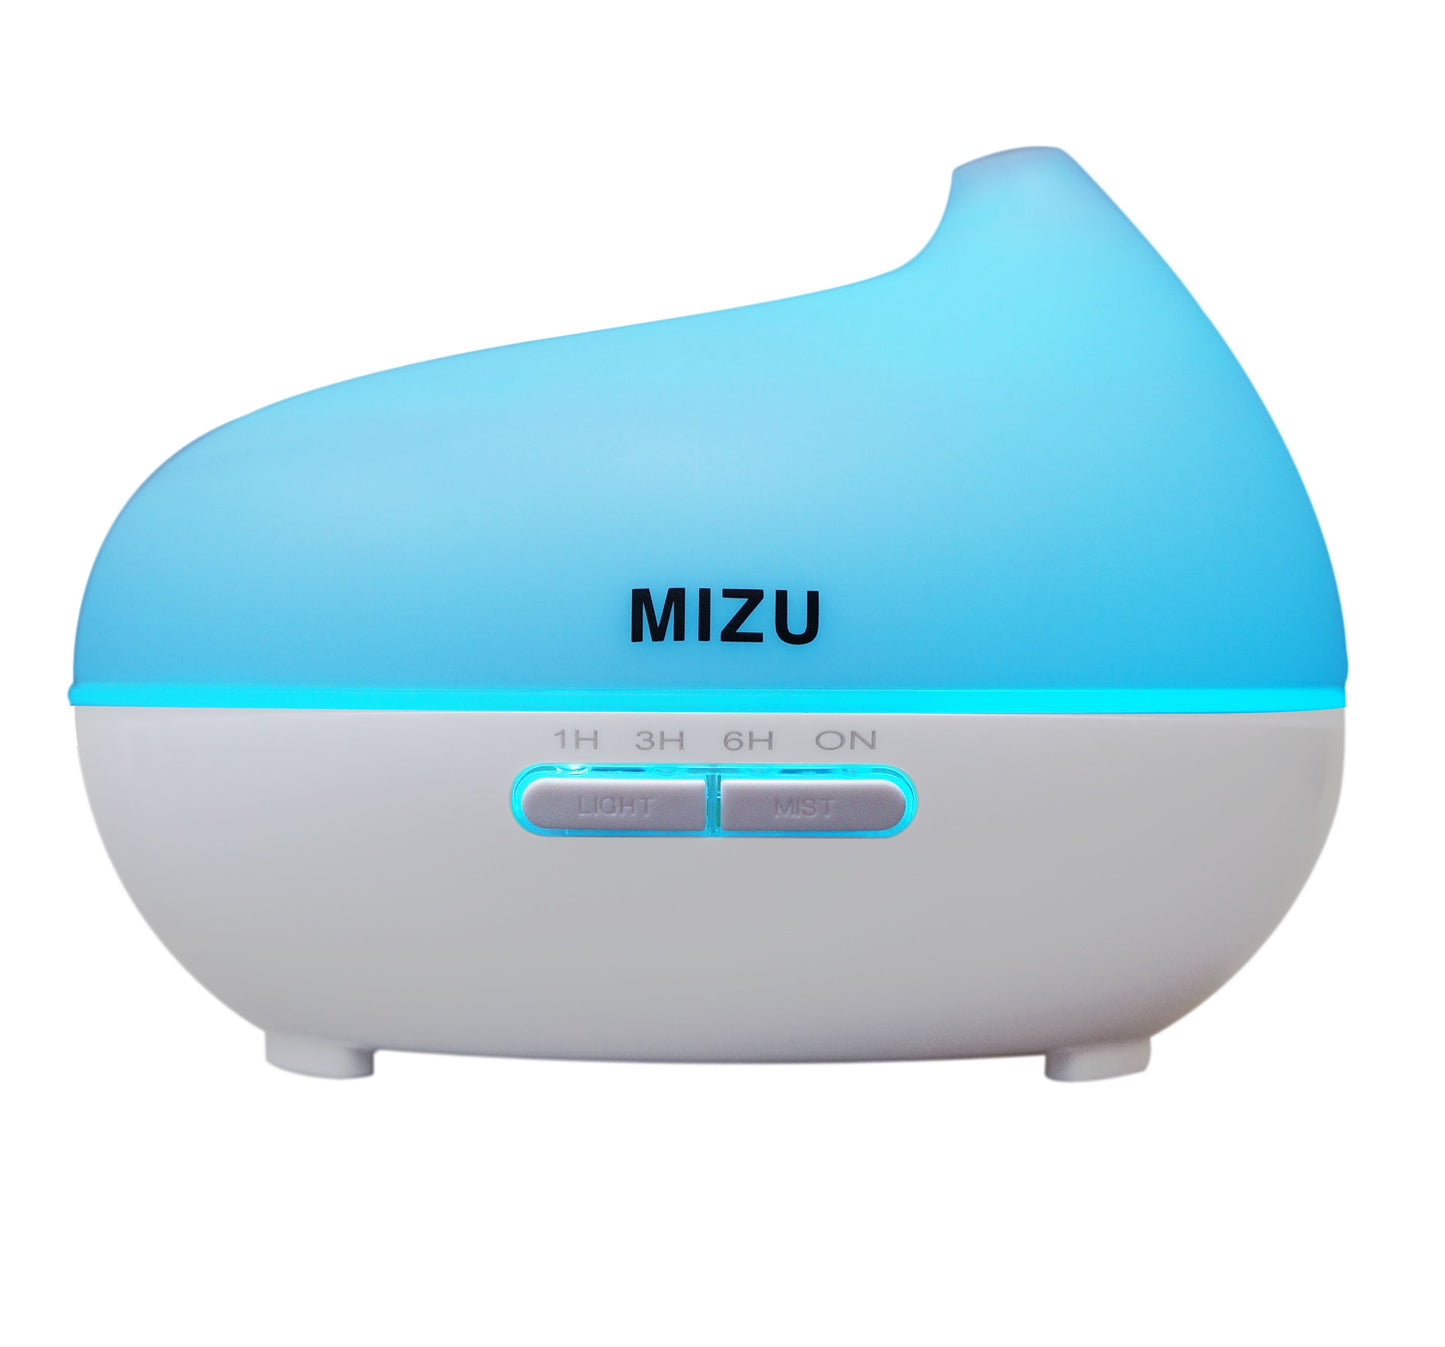 Mizu 300ml Ultrasonic Aroma Diffuser